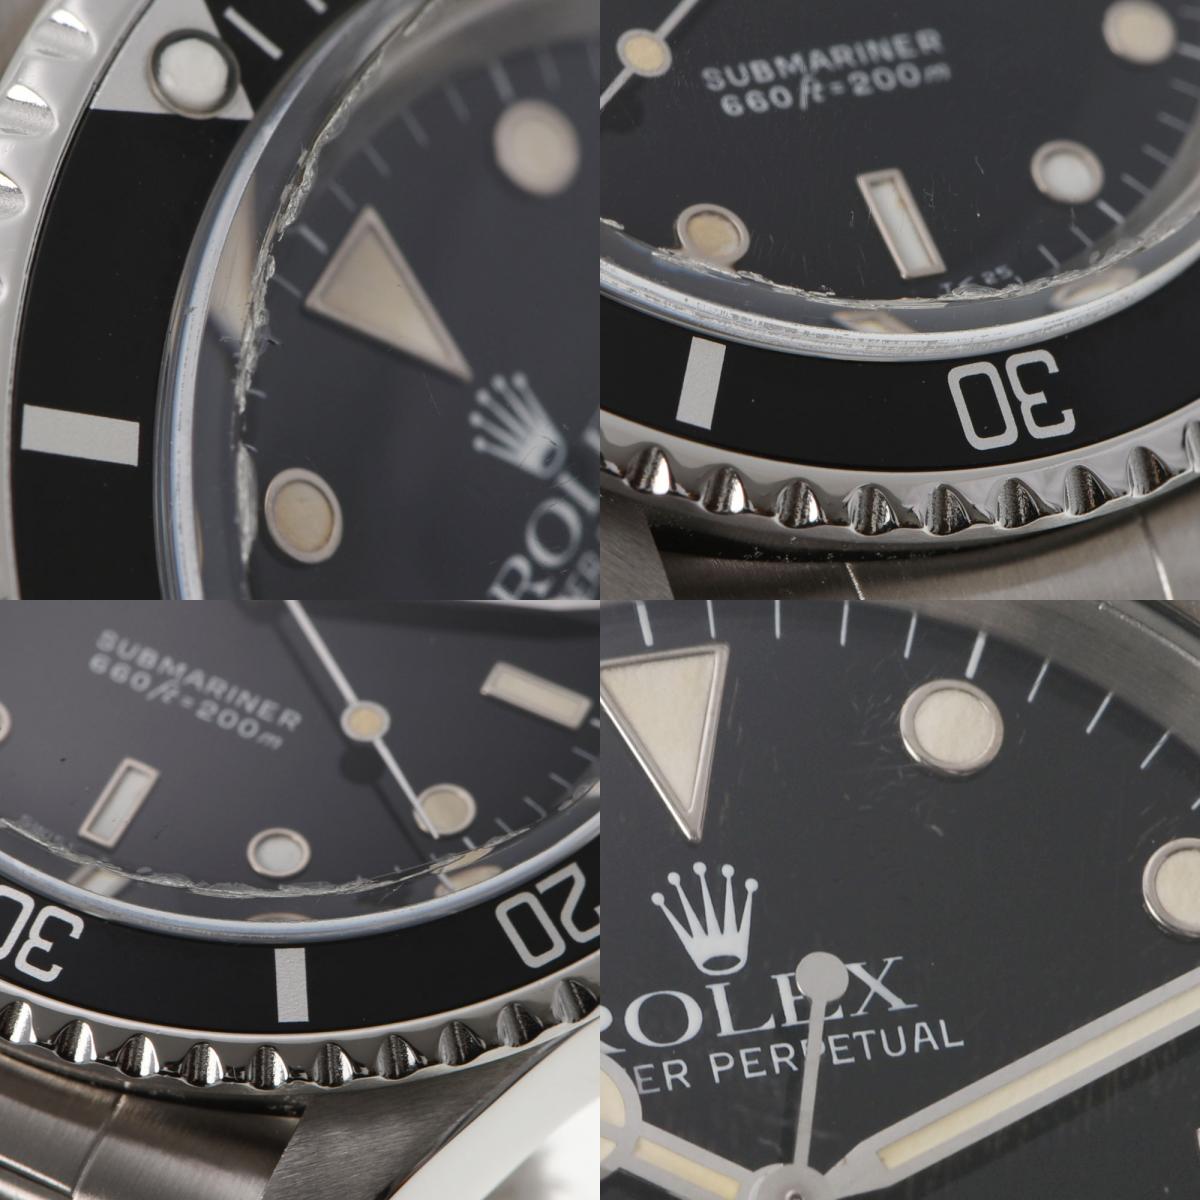 Rolex Black Stainless Steel Submariner 5513 Automatic Men's Wristwatch 40 Mm